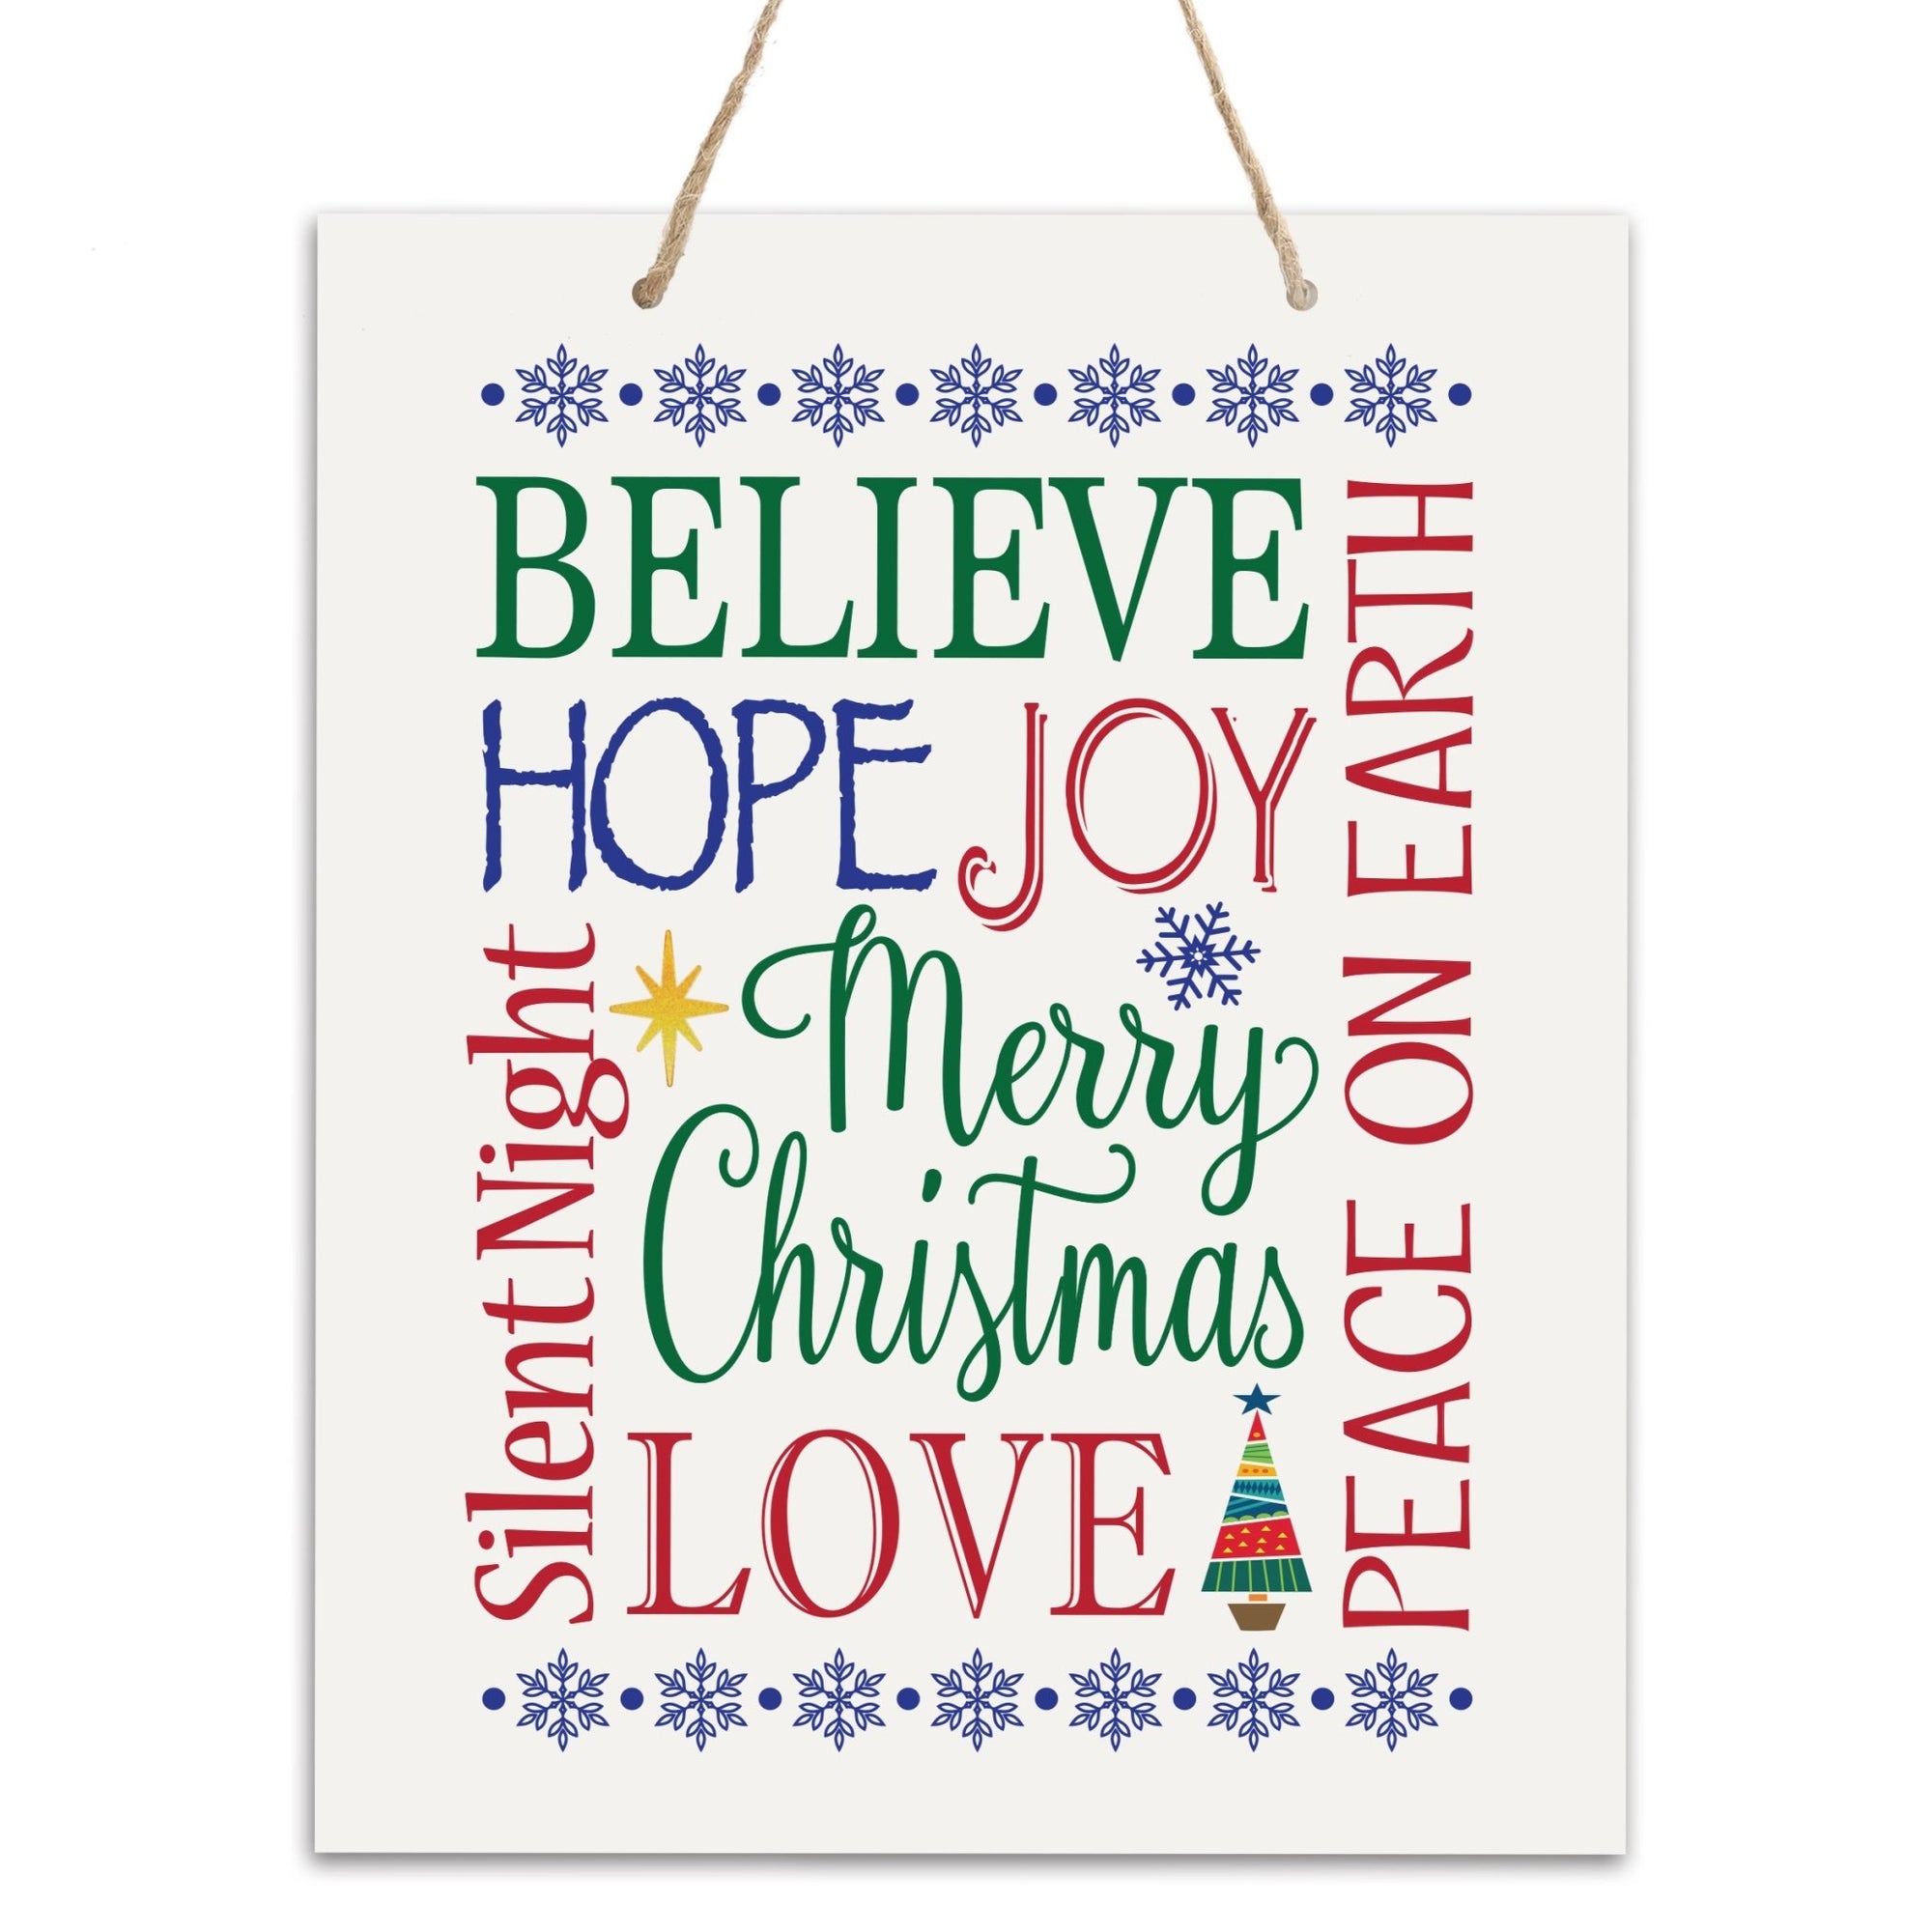 Merry Christmas Wall Hanging Sign - Believe Hope Joy - LifeSong Milestones